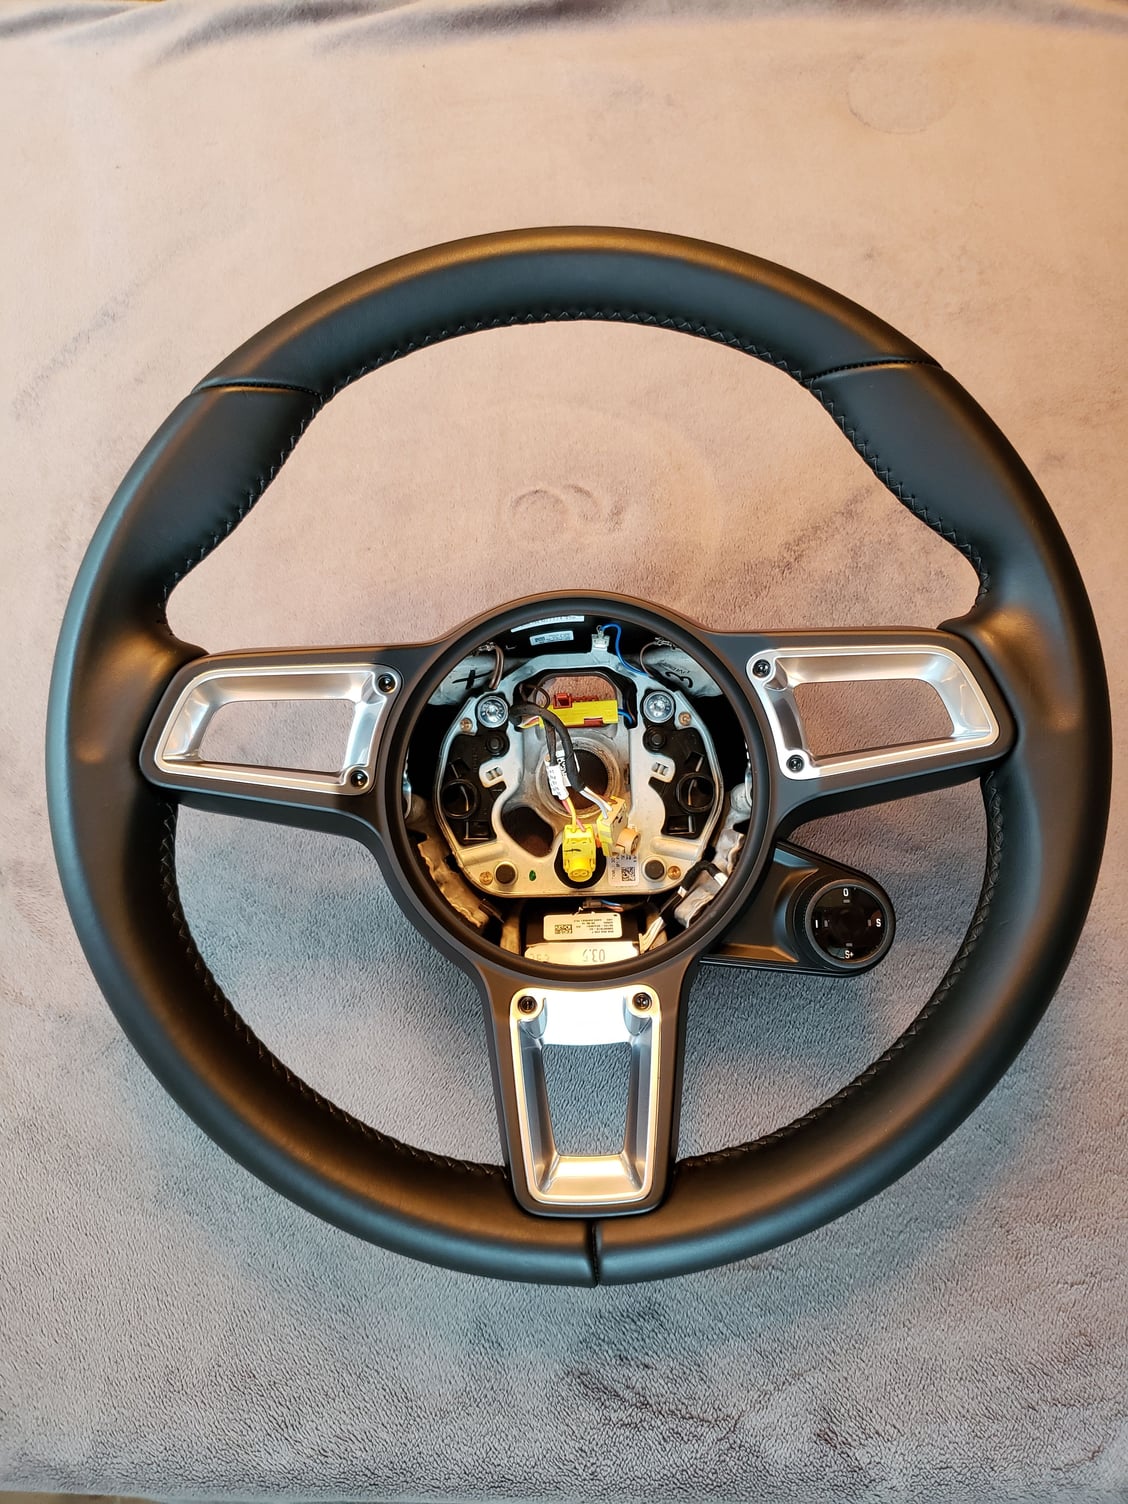 Steering/Suspension - Porsche GT Sport Steering Wheel Manual Black Leather 991.2 991 718 987 997 - Used - 2009 to 2019 Porsche 911 - 2009 to 2019 Porsche Boxster - 2009 to 2019 Porsche Cayman - Renton, WA 98059, United States